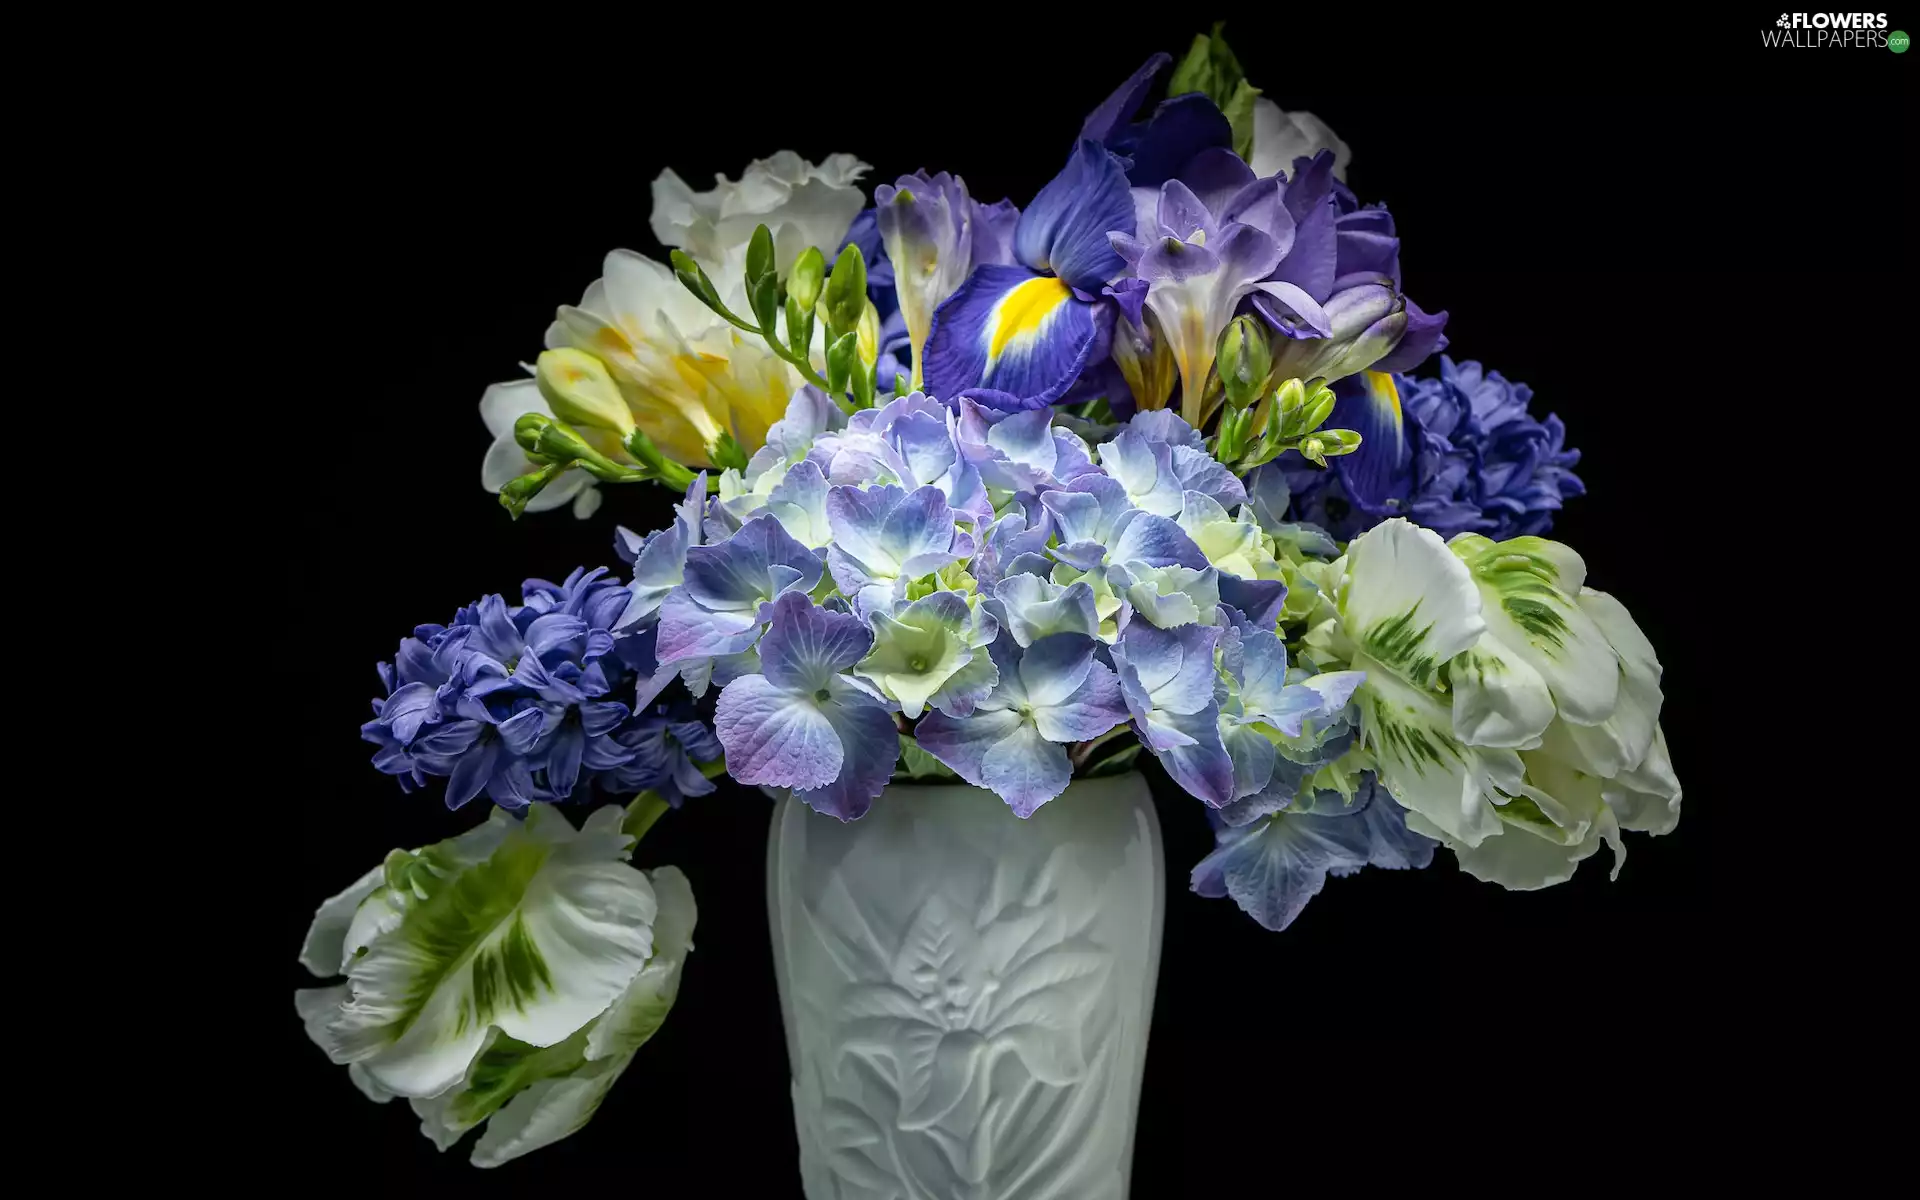 hydrangea, freesia, Vase, Tulips, hyacinth, flowers, bouquet, iris